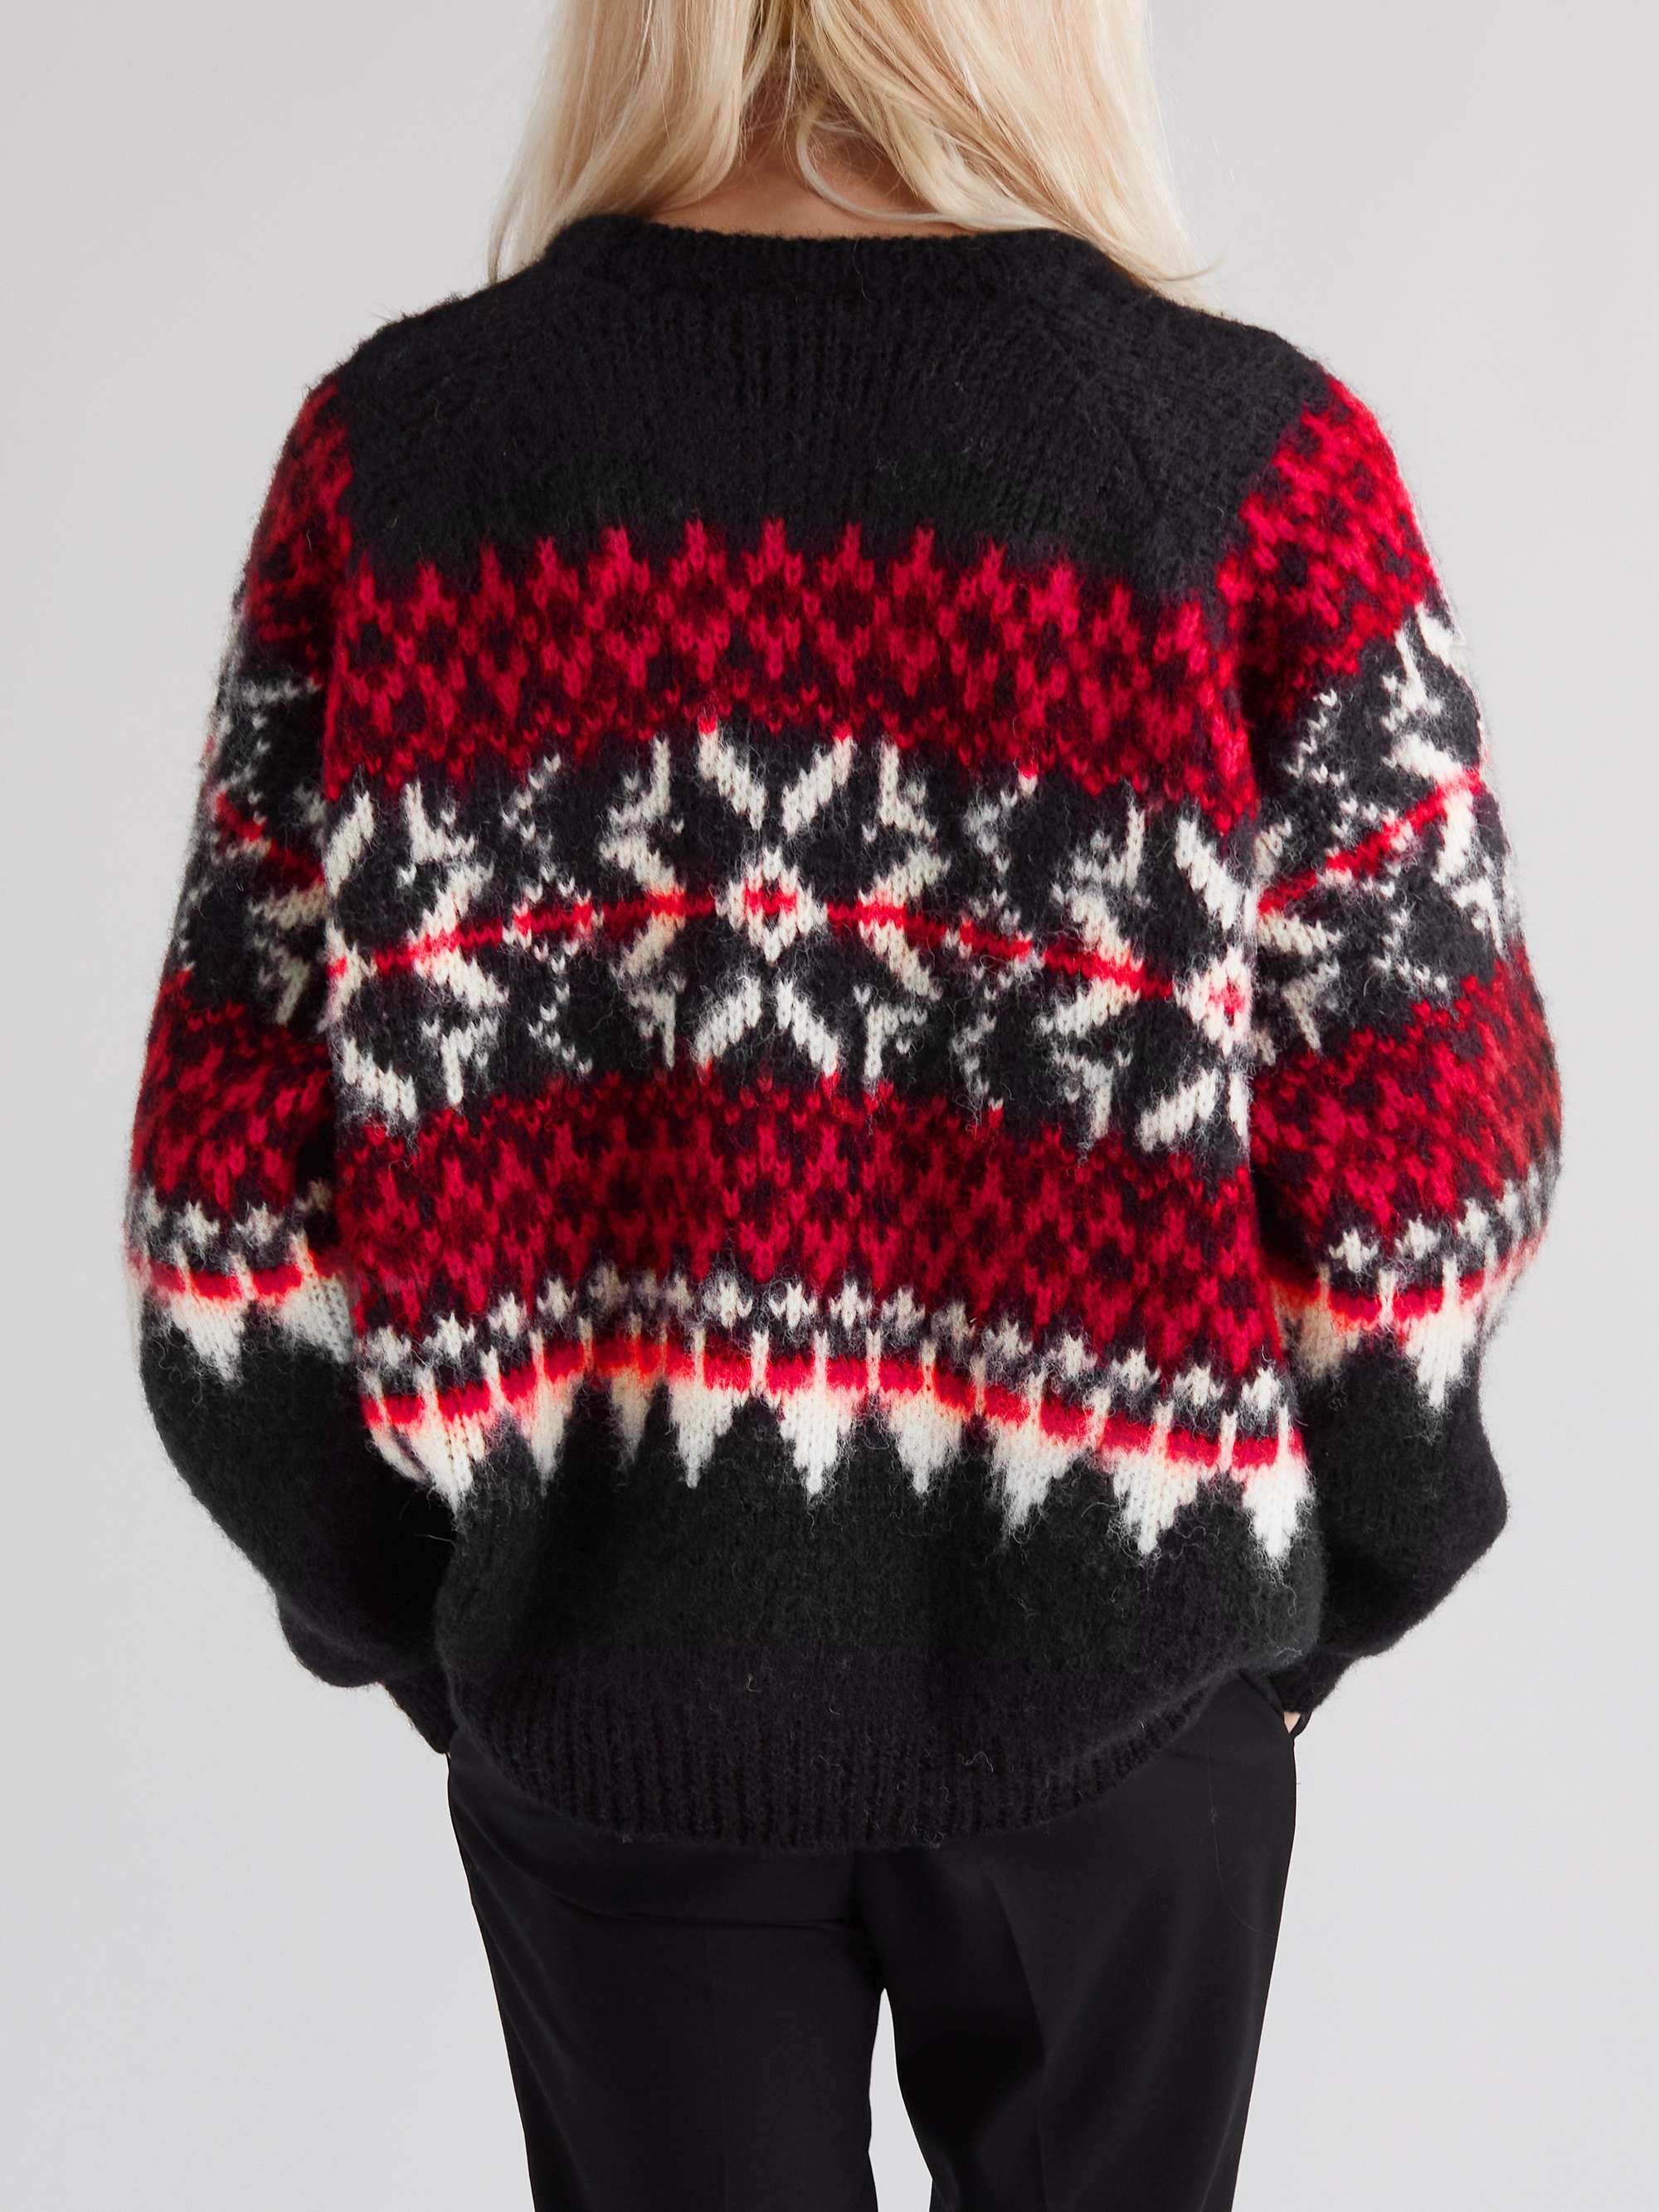 CELINE HOMME Fair Isle Wool Sweater